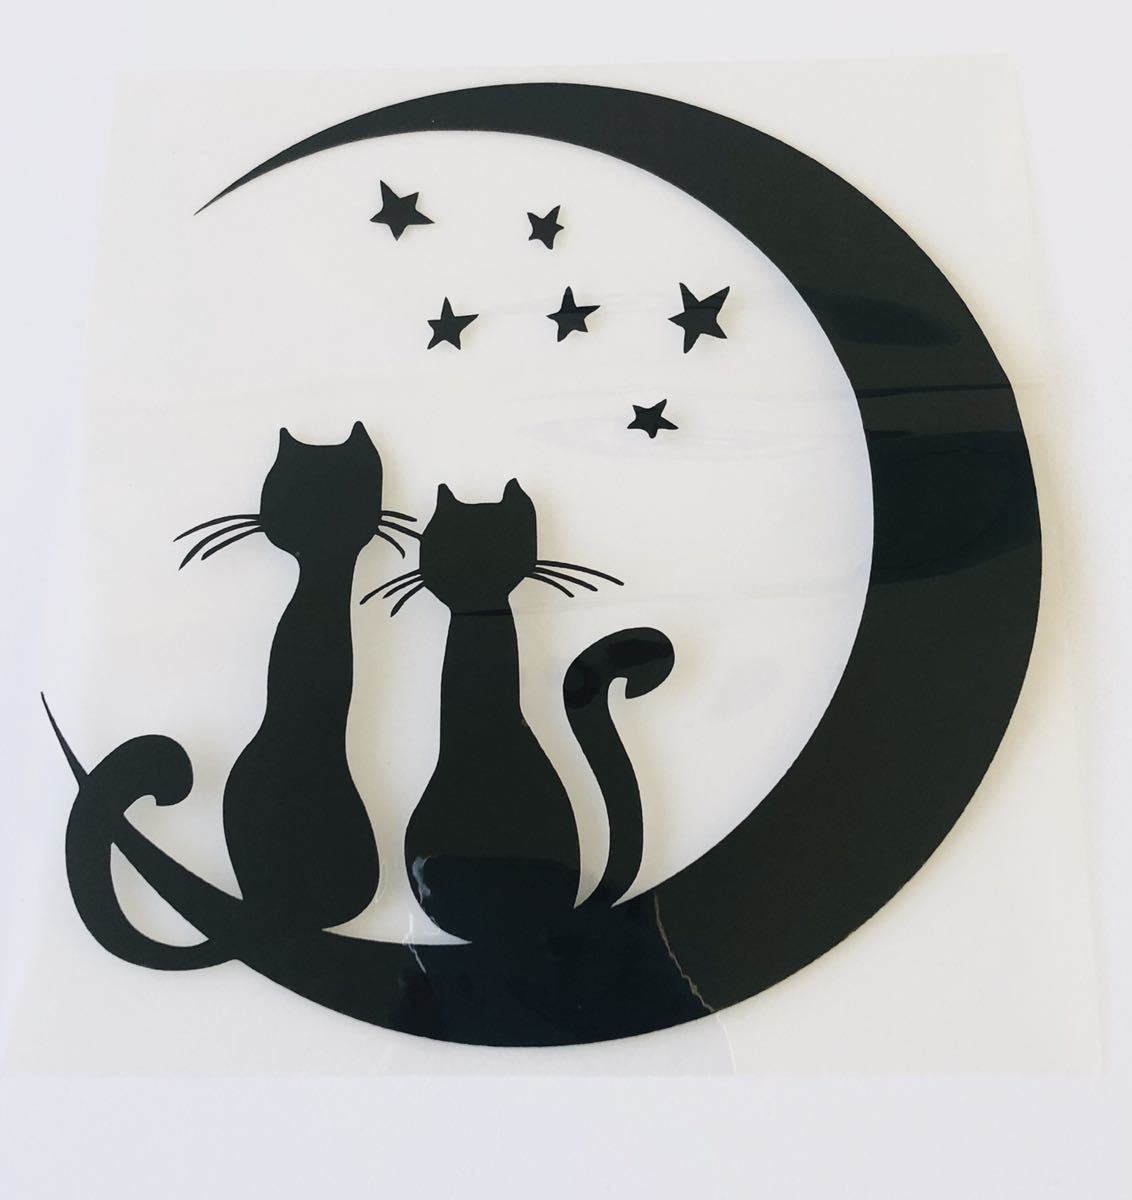  month . pair cat pretty wonderful cat sticker diameter approximately 16cm black color 